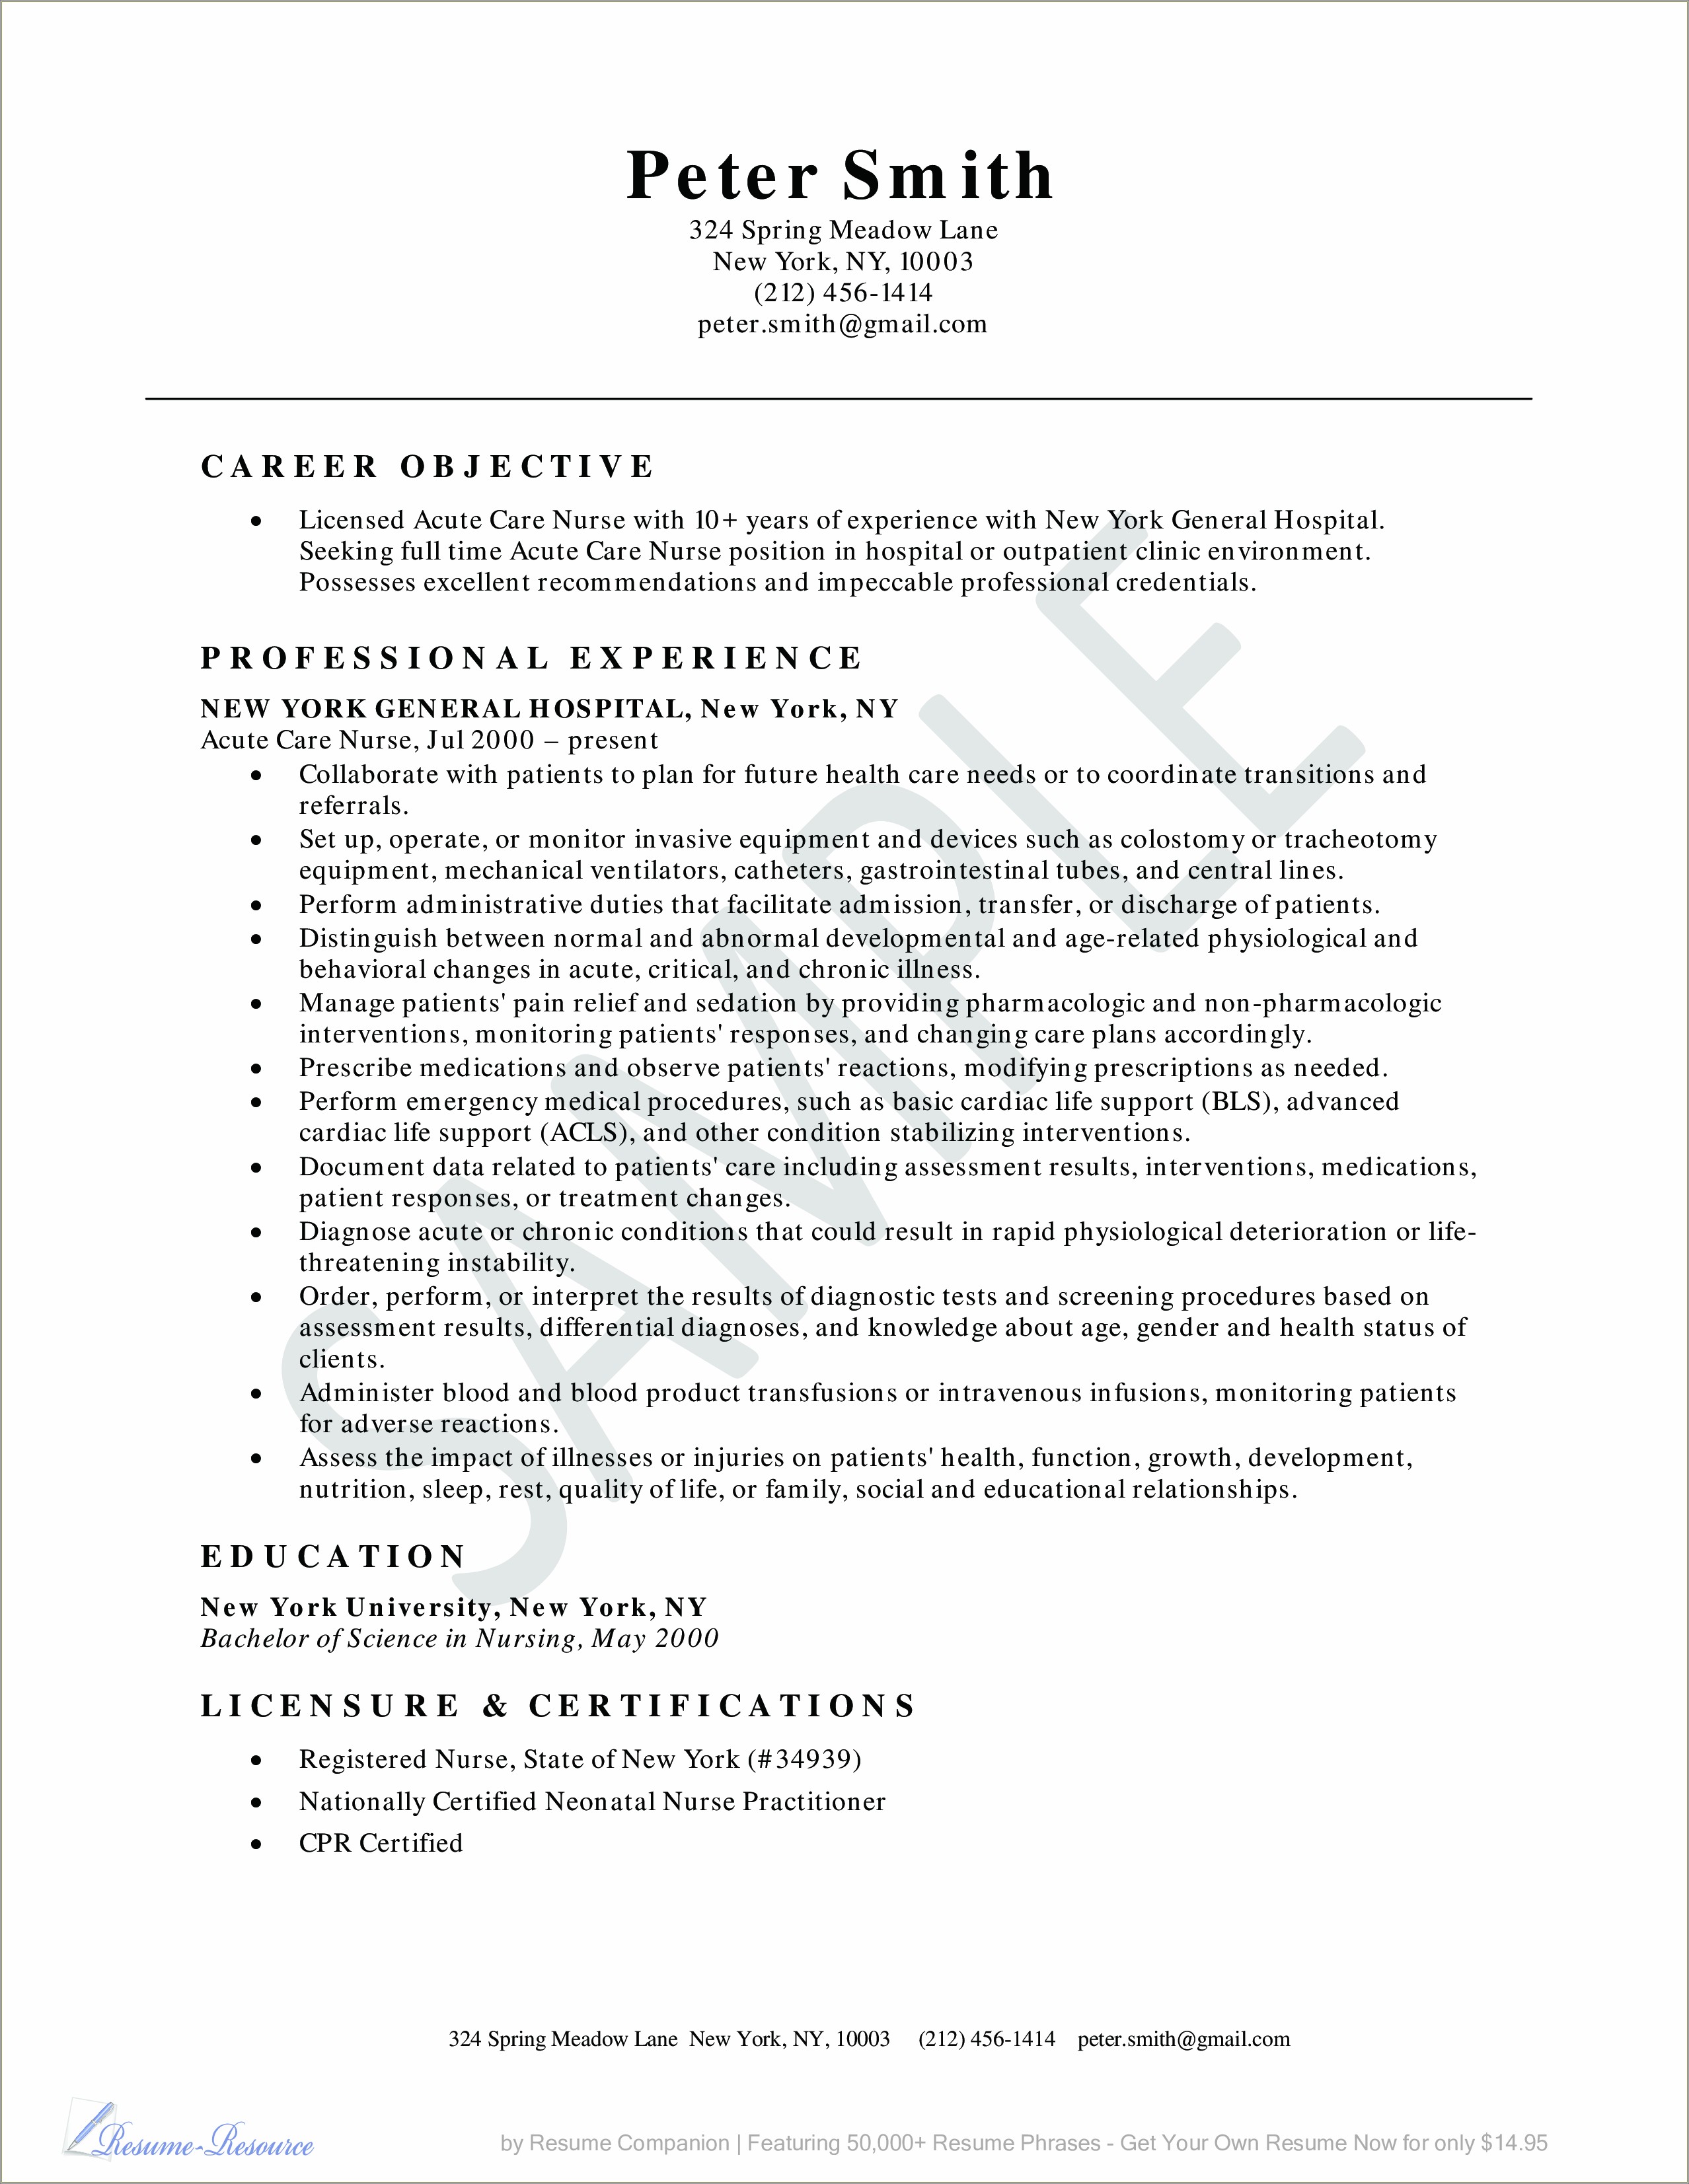 Example Of Professional Credentials On Nursing Resume